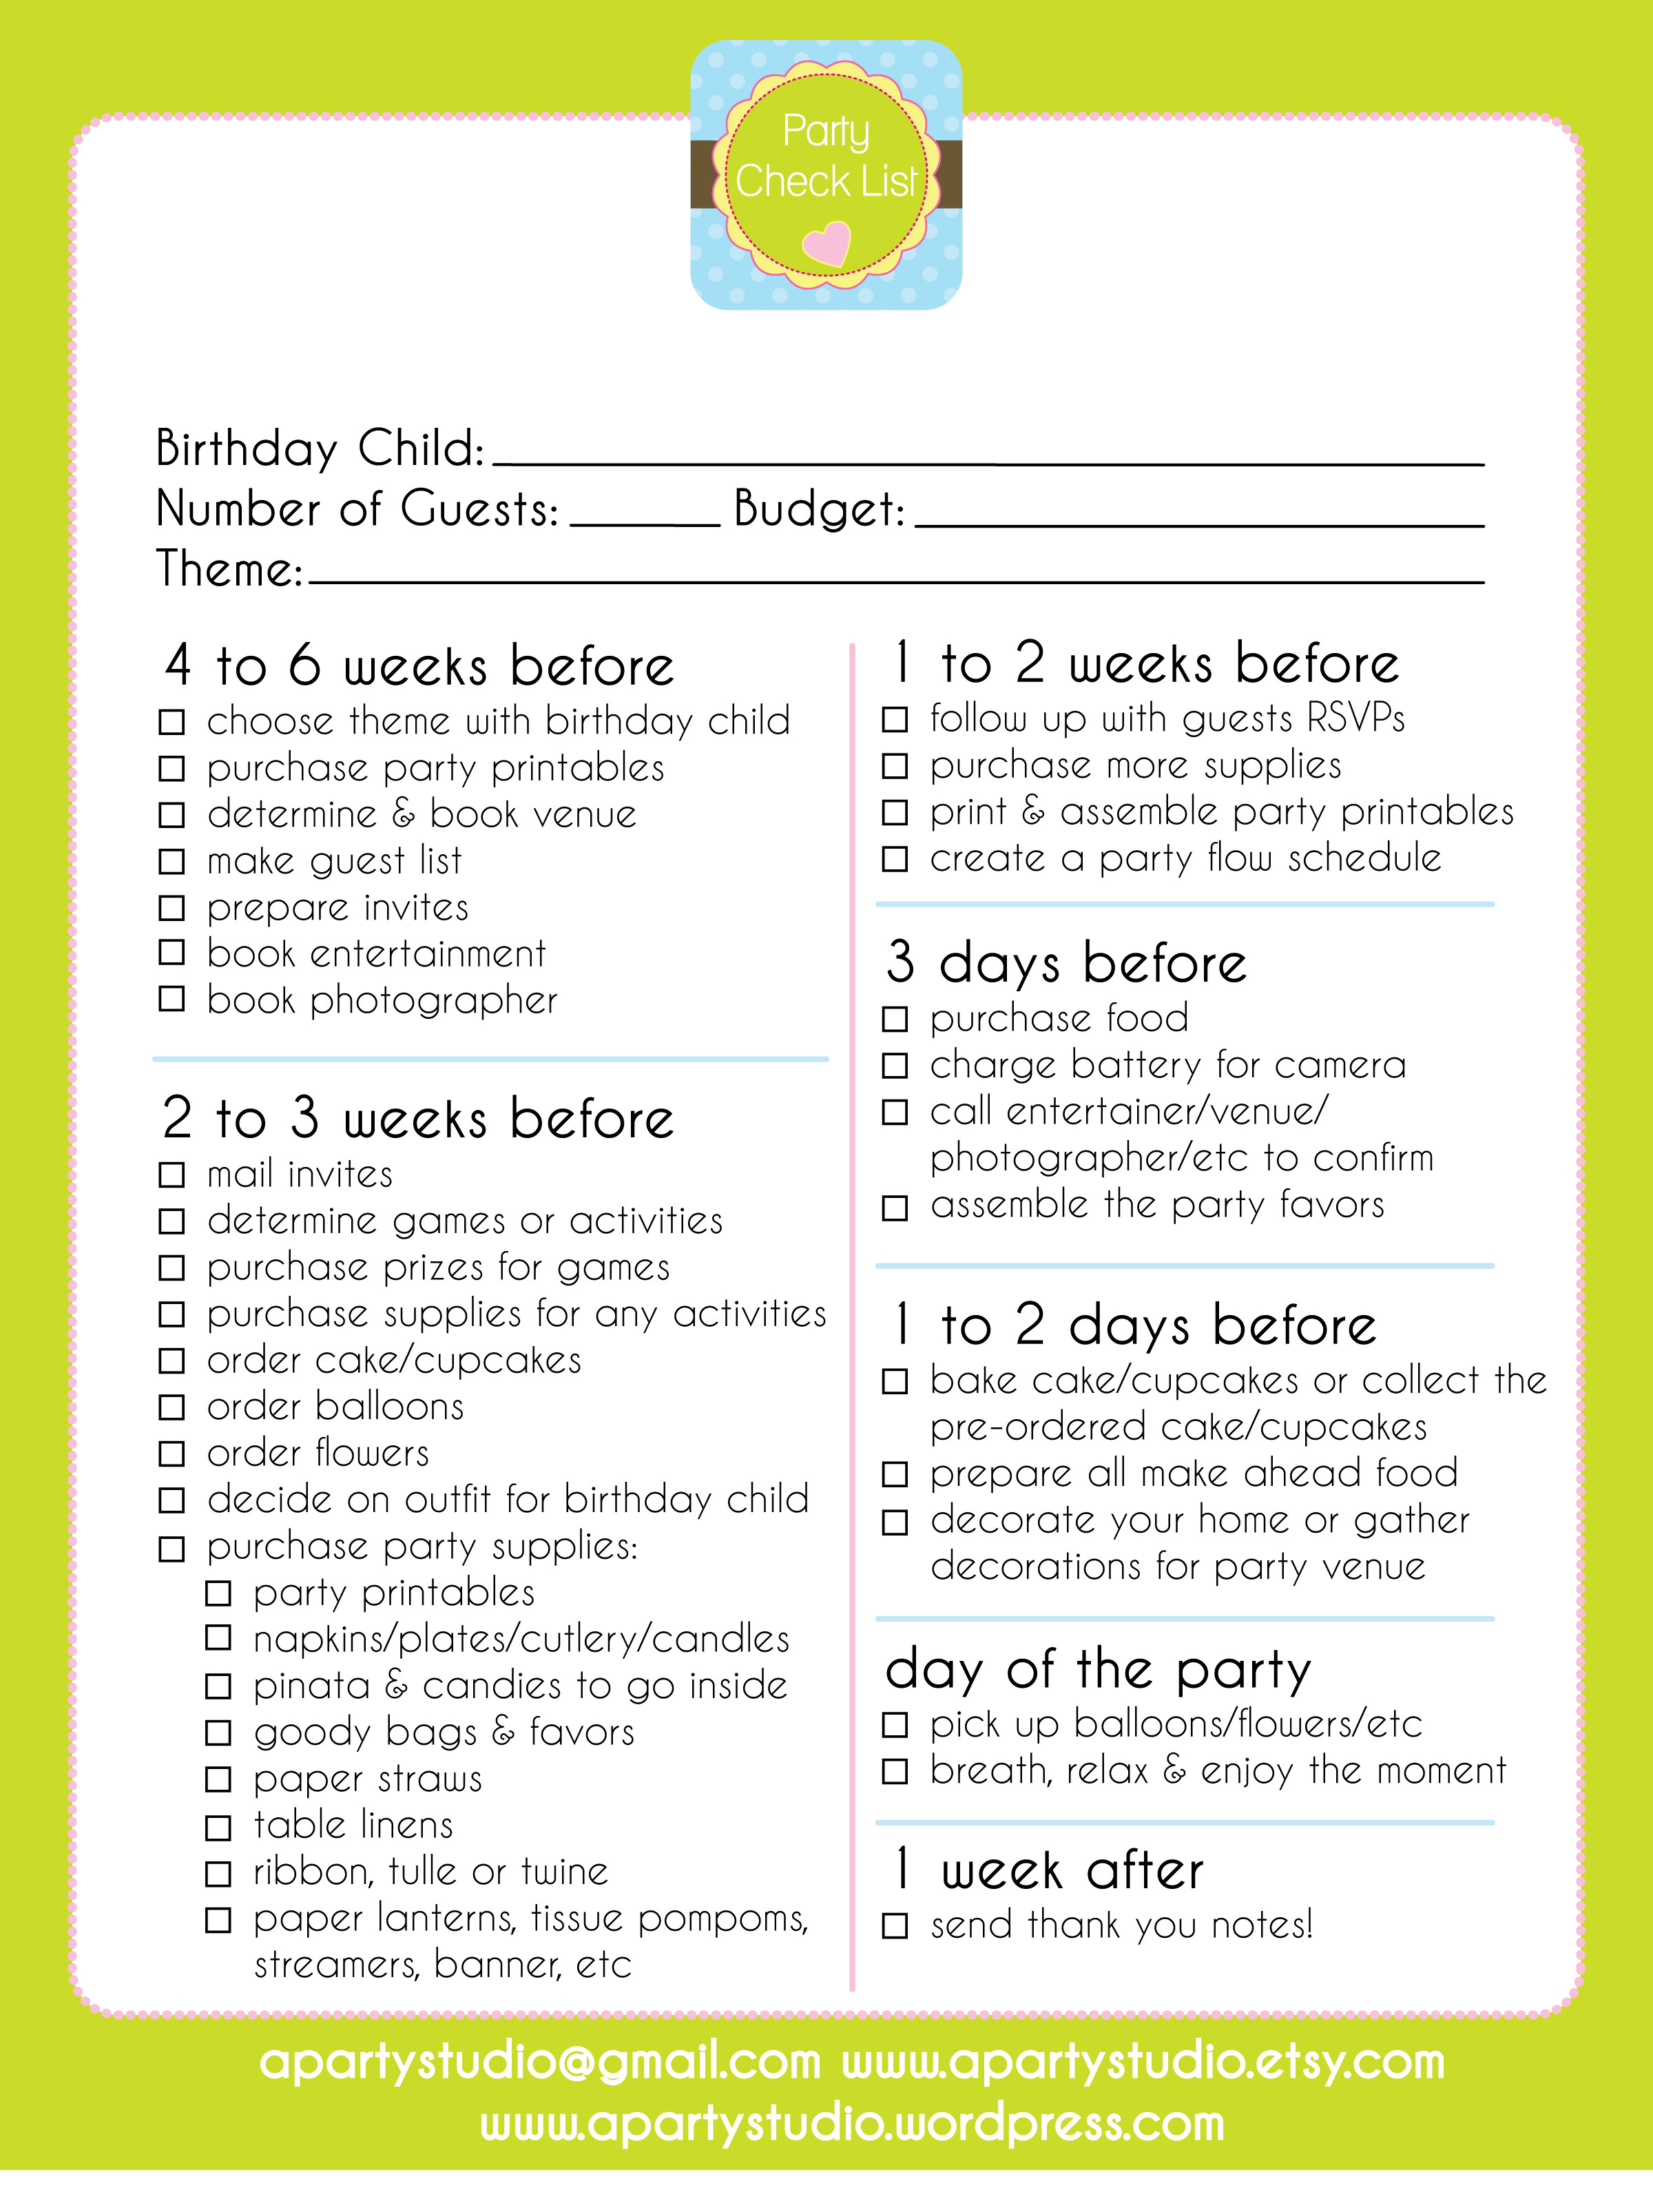 Birthday Party Checklist
 FREE Printable Party Checklist